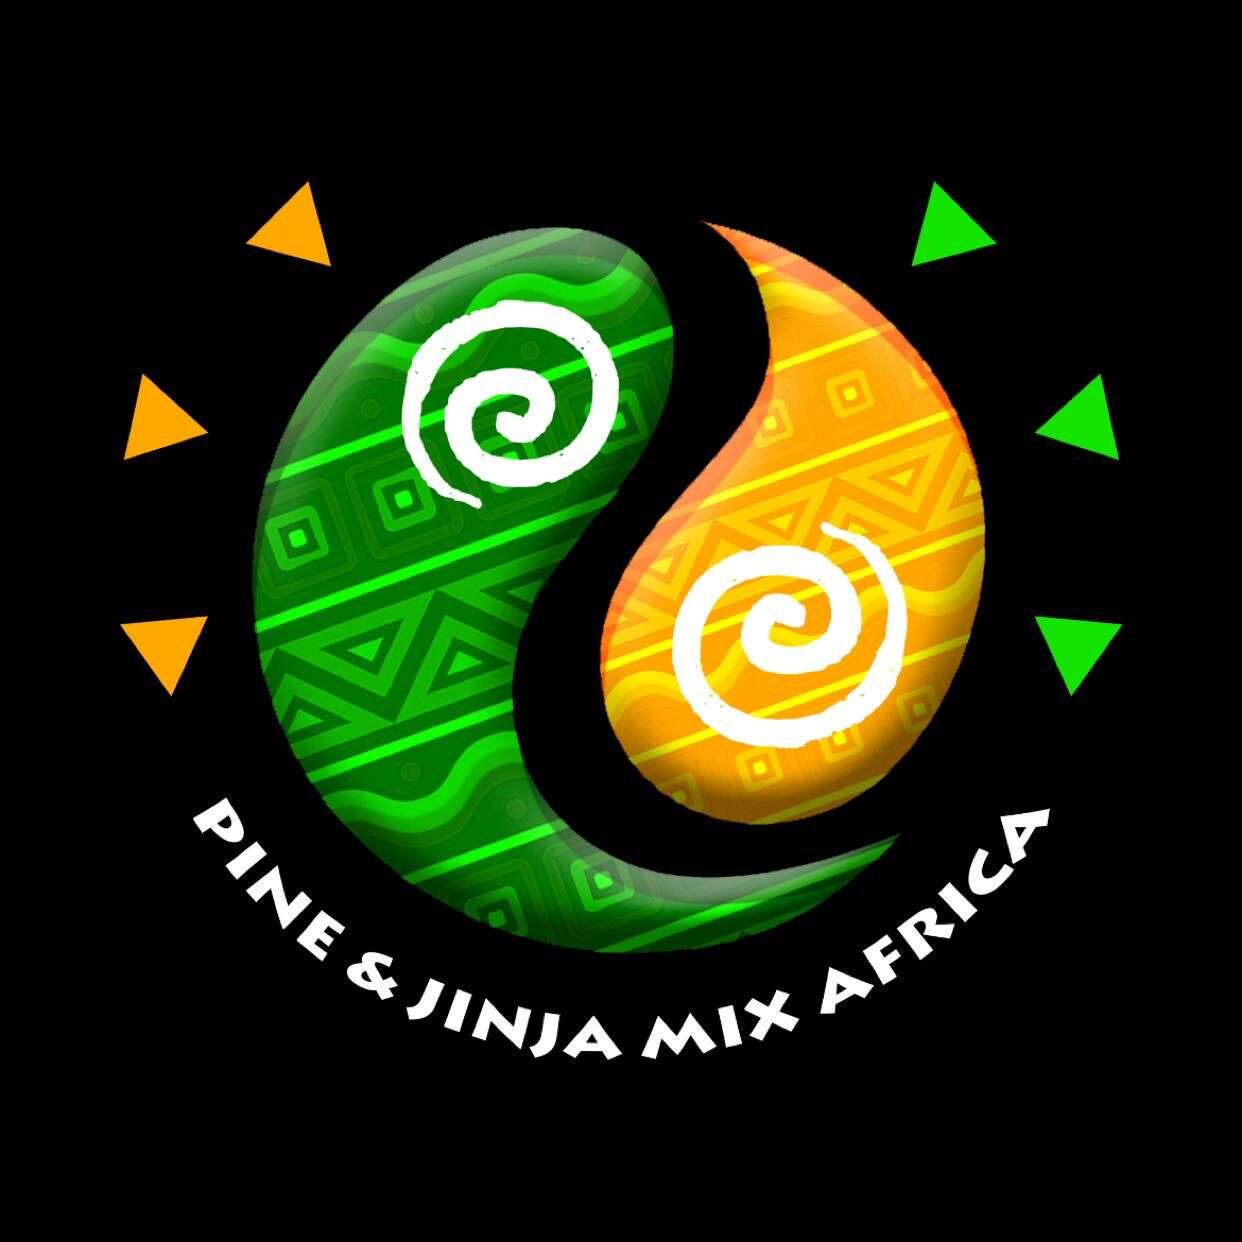 DJ Millzy becomes most followed Ghanaian on TikTok, celebrates milestone with new 'Pine & Jinja Mix' mix series